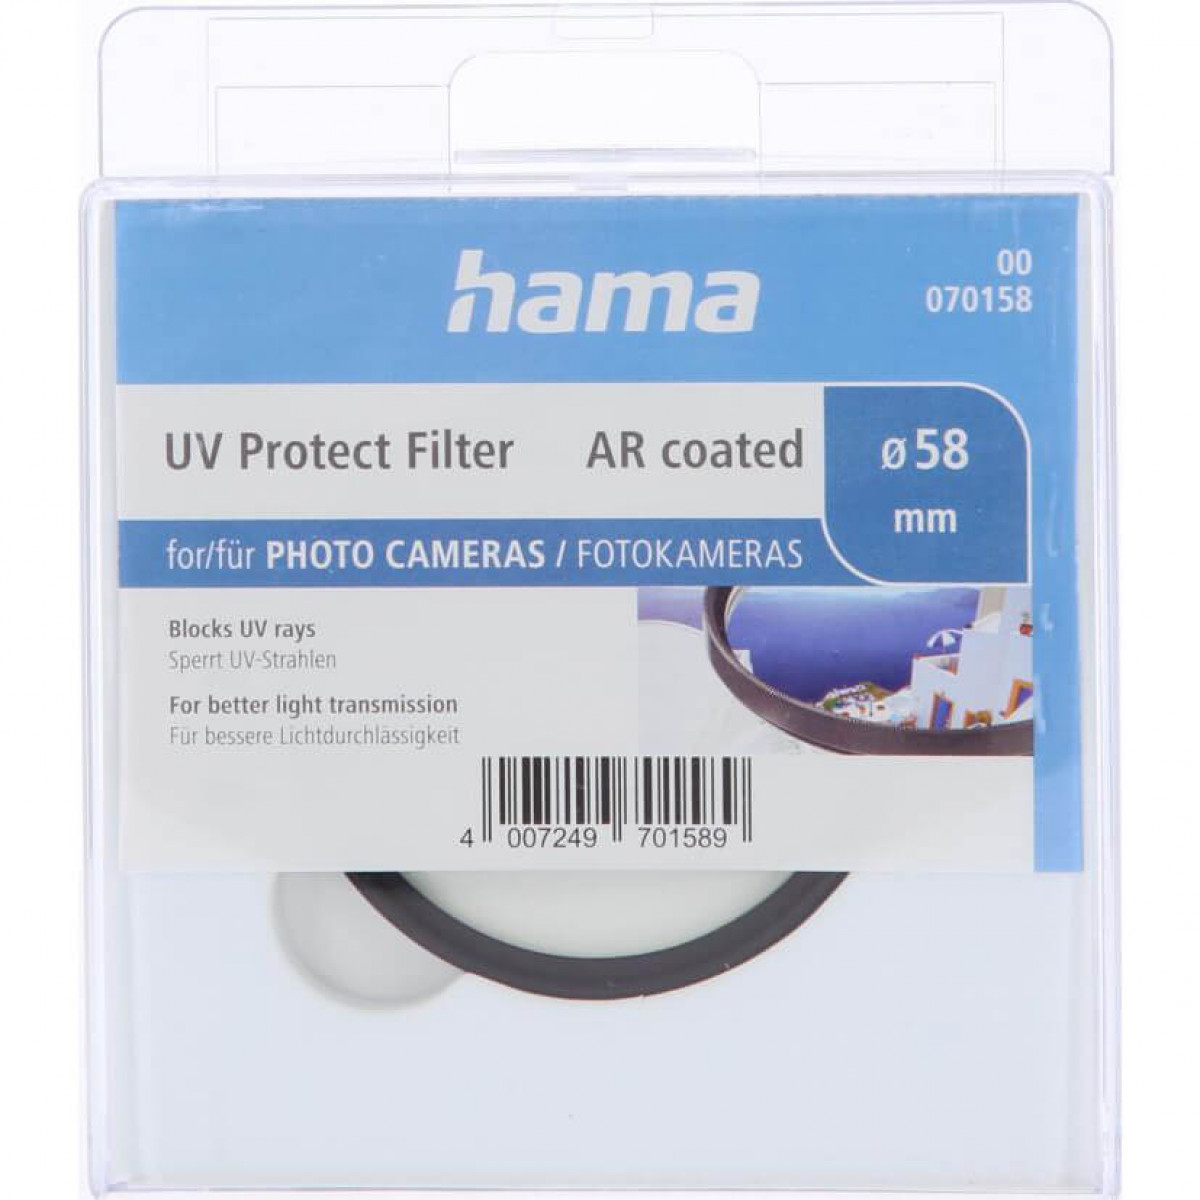 HAMA AR coated, mm UV-Filter 58 mm 58,0